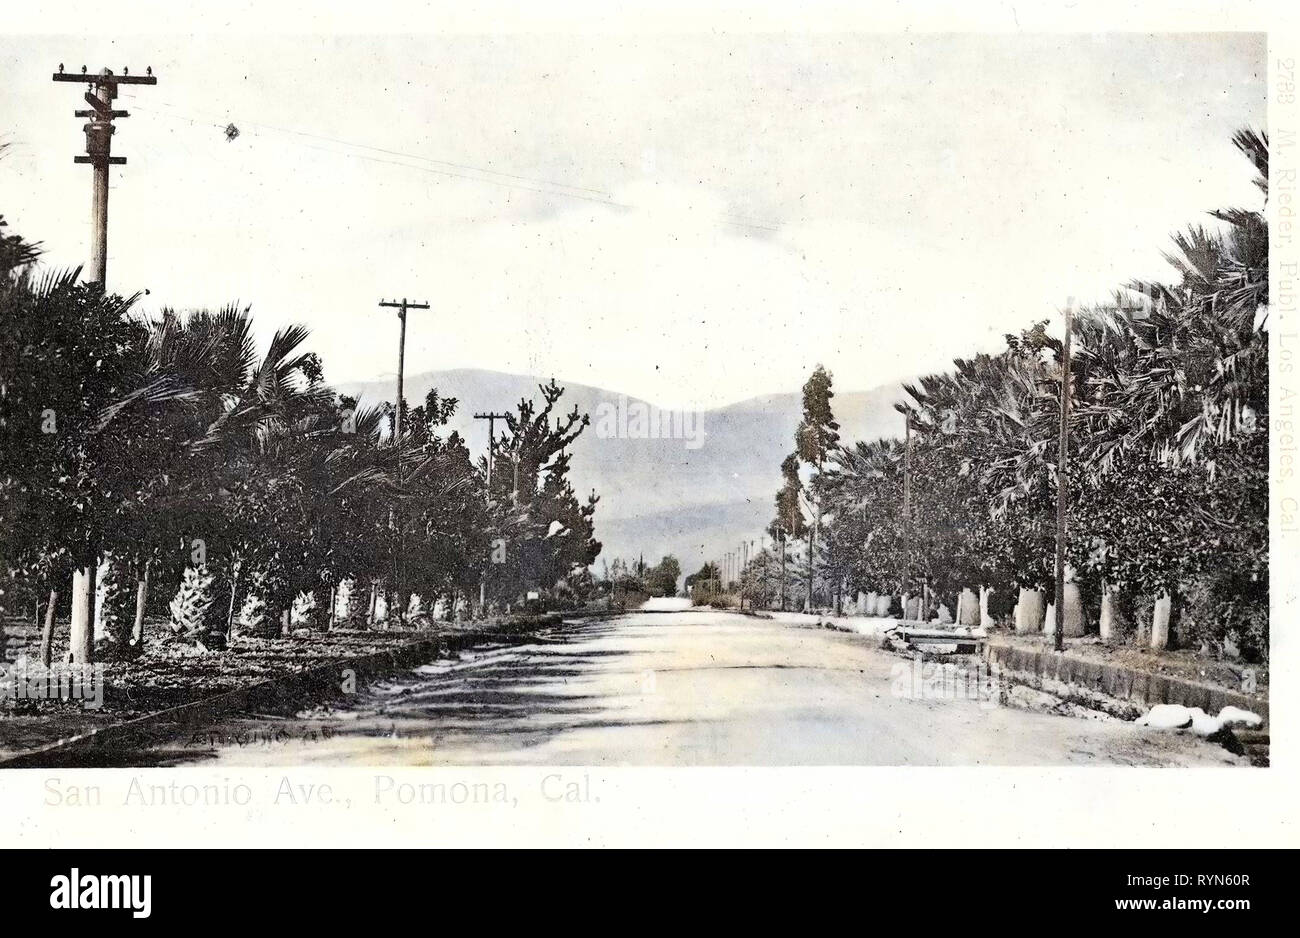 Avenues in the United States, Pomona, California, 1904, San Antonio Ave Stock Photo